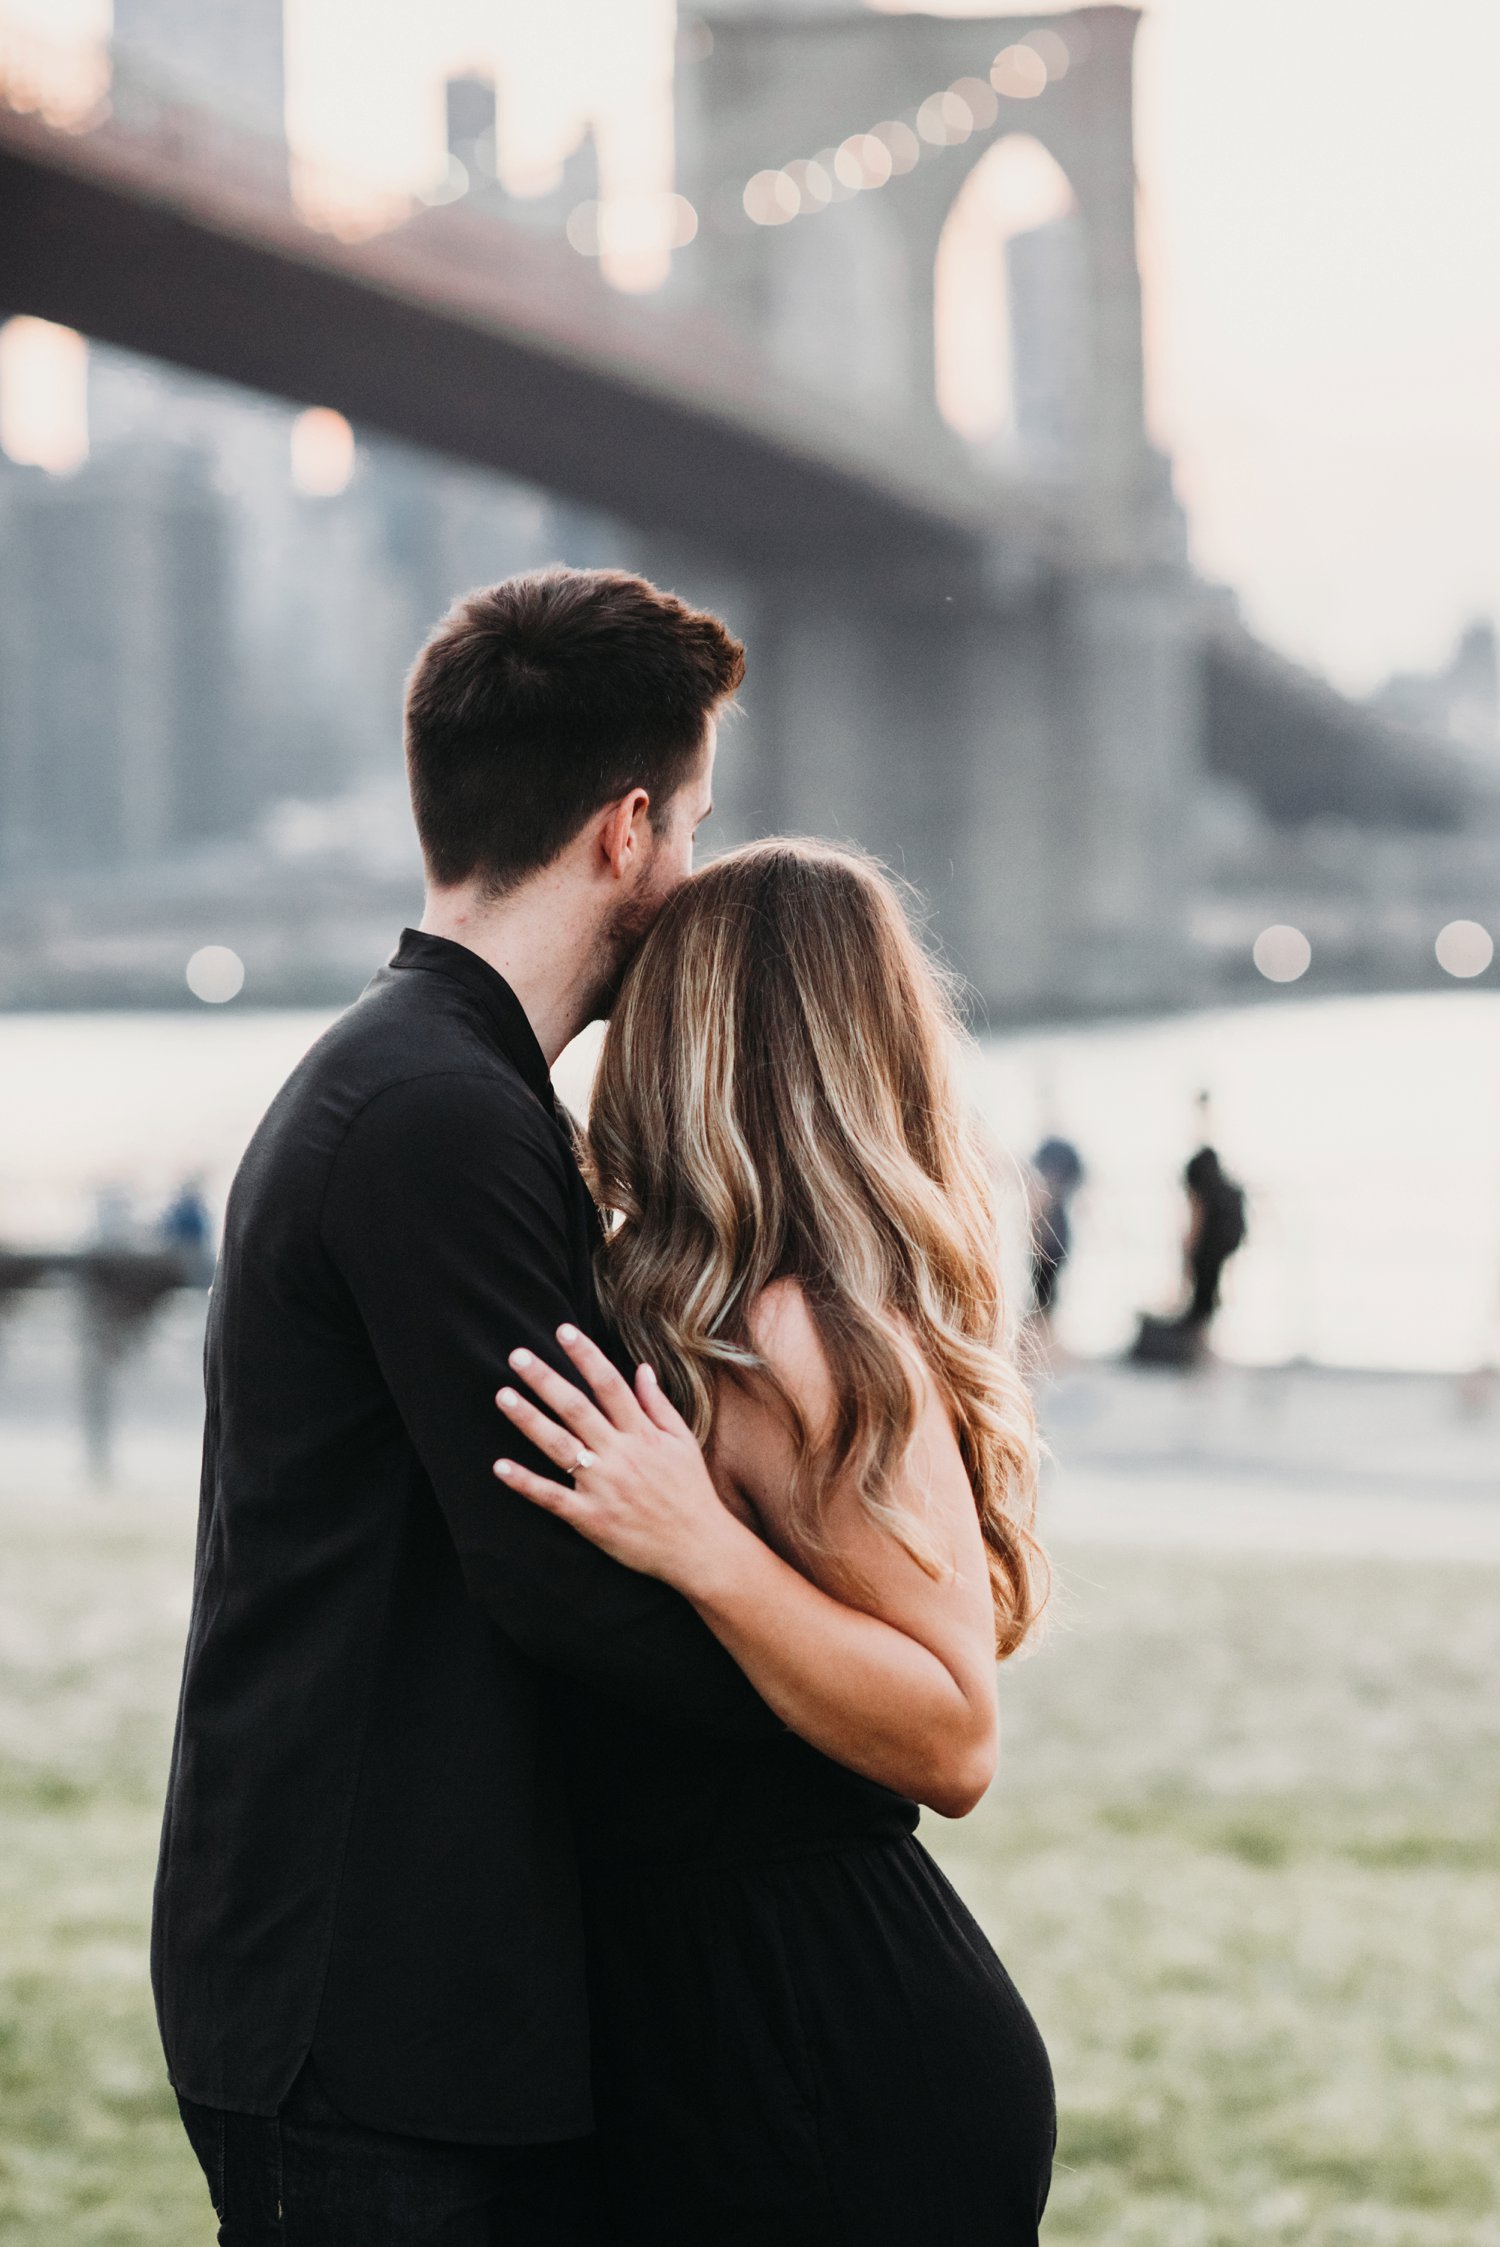  images by feliciathephotographer.com | destination wedding photographer | new york city | brooklyn bridge | proposal | engagement | whimsical | romantic | true love | she said yes | casual | diamond ring | 